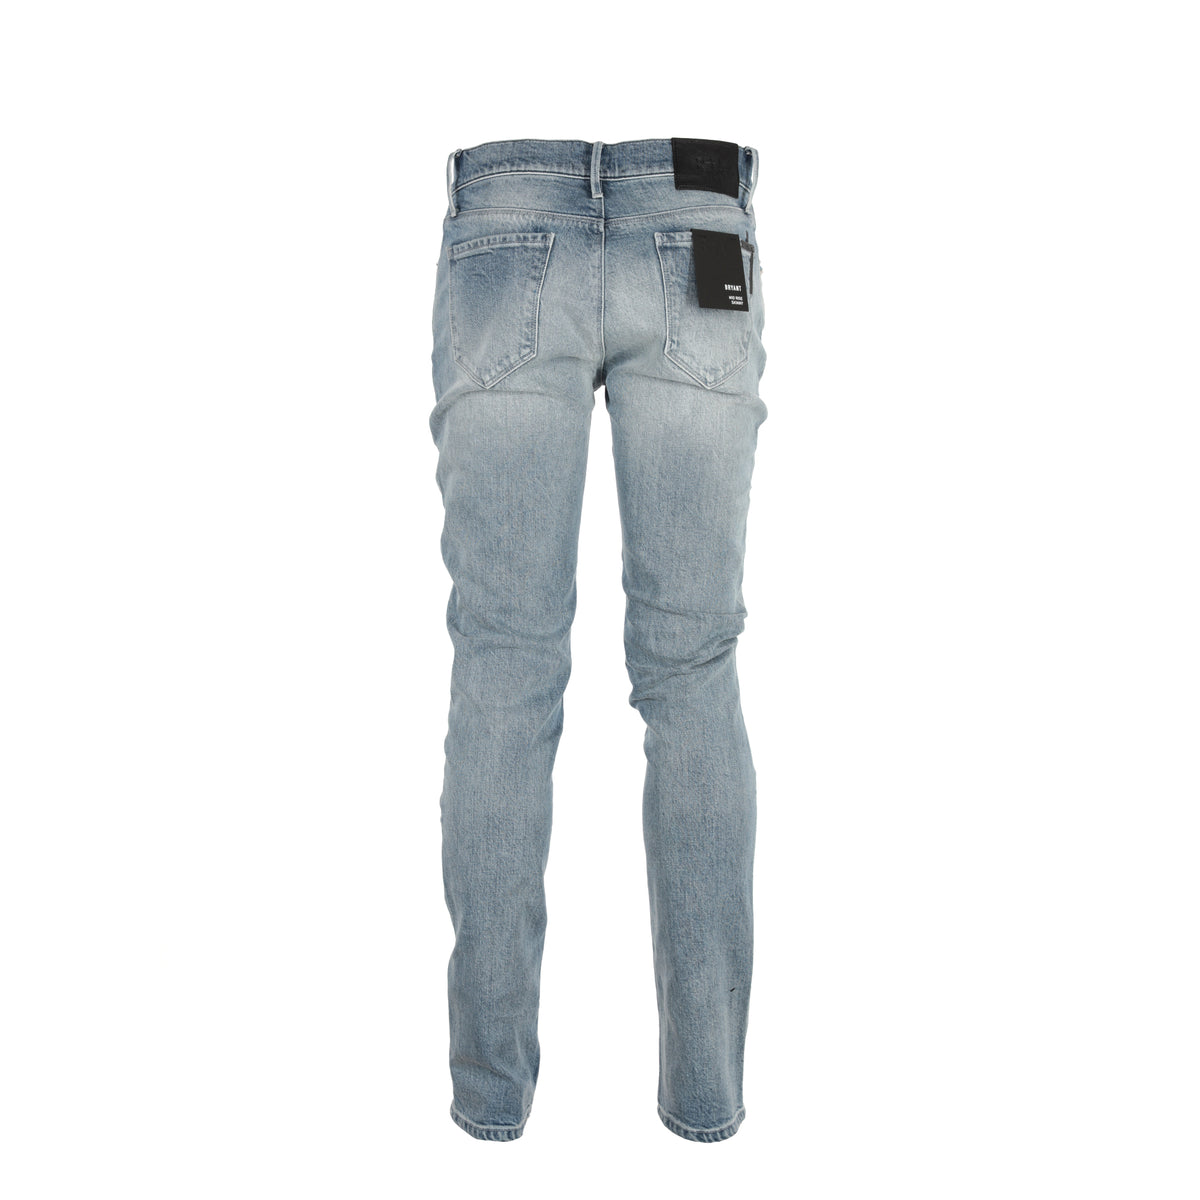  RtA Bryant Medium Blue Wash Men's Skinny Jeans